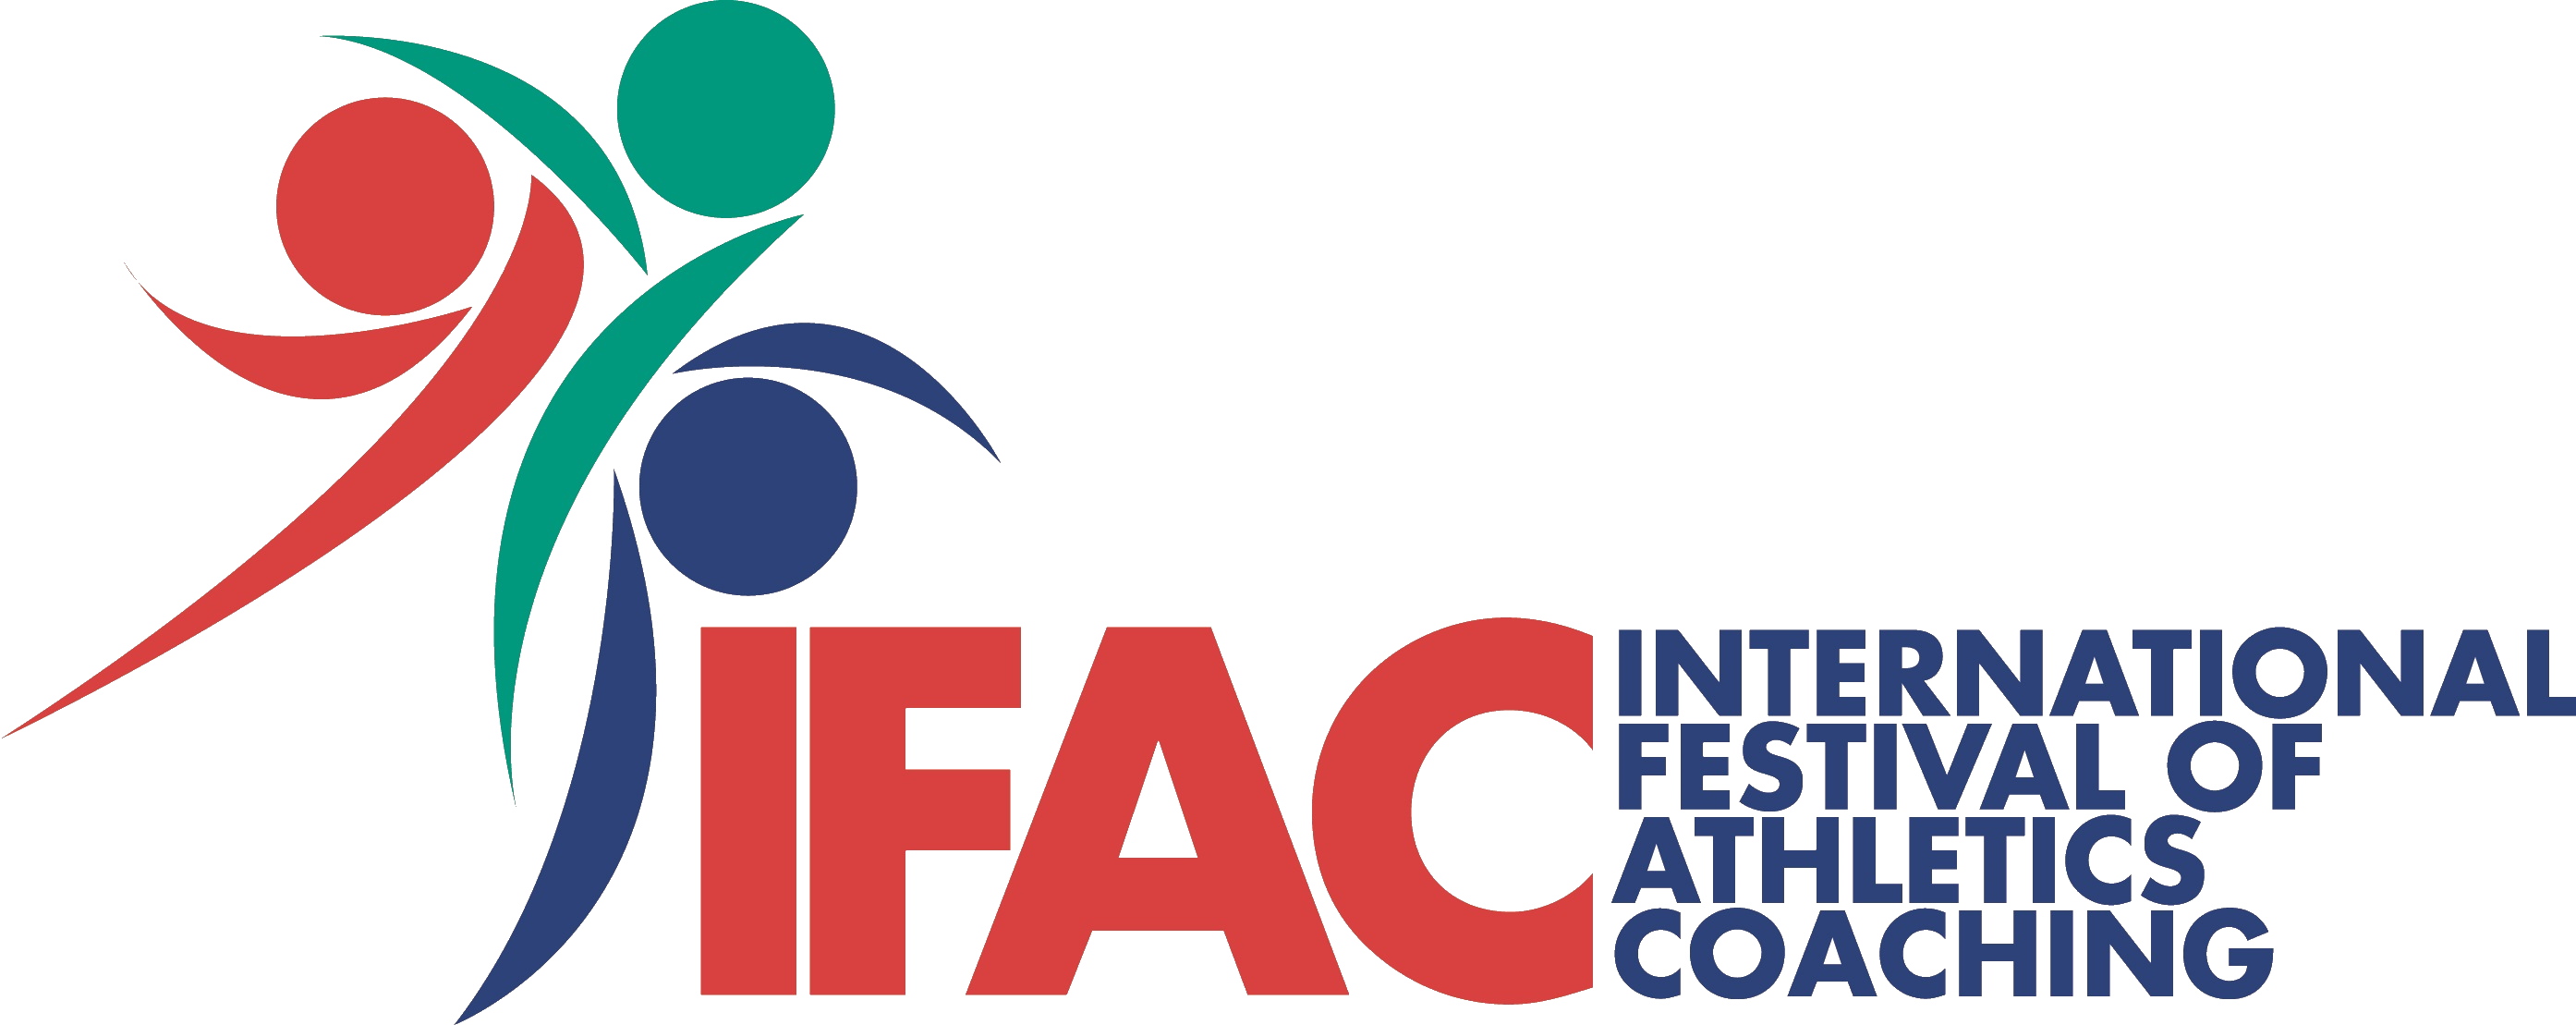 IFAC 2021 subscription